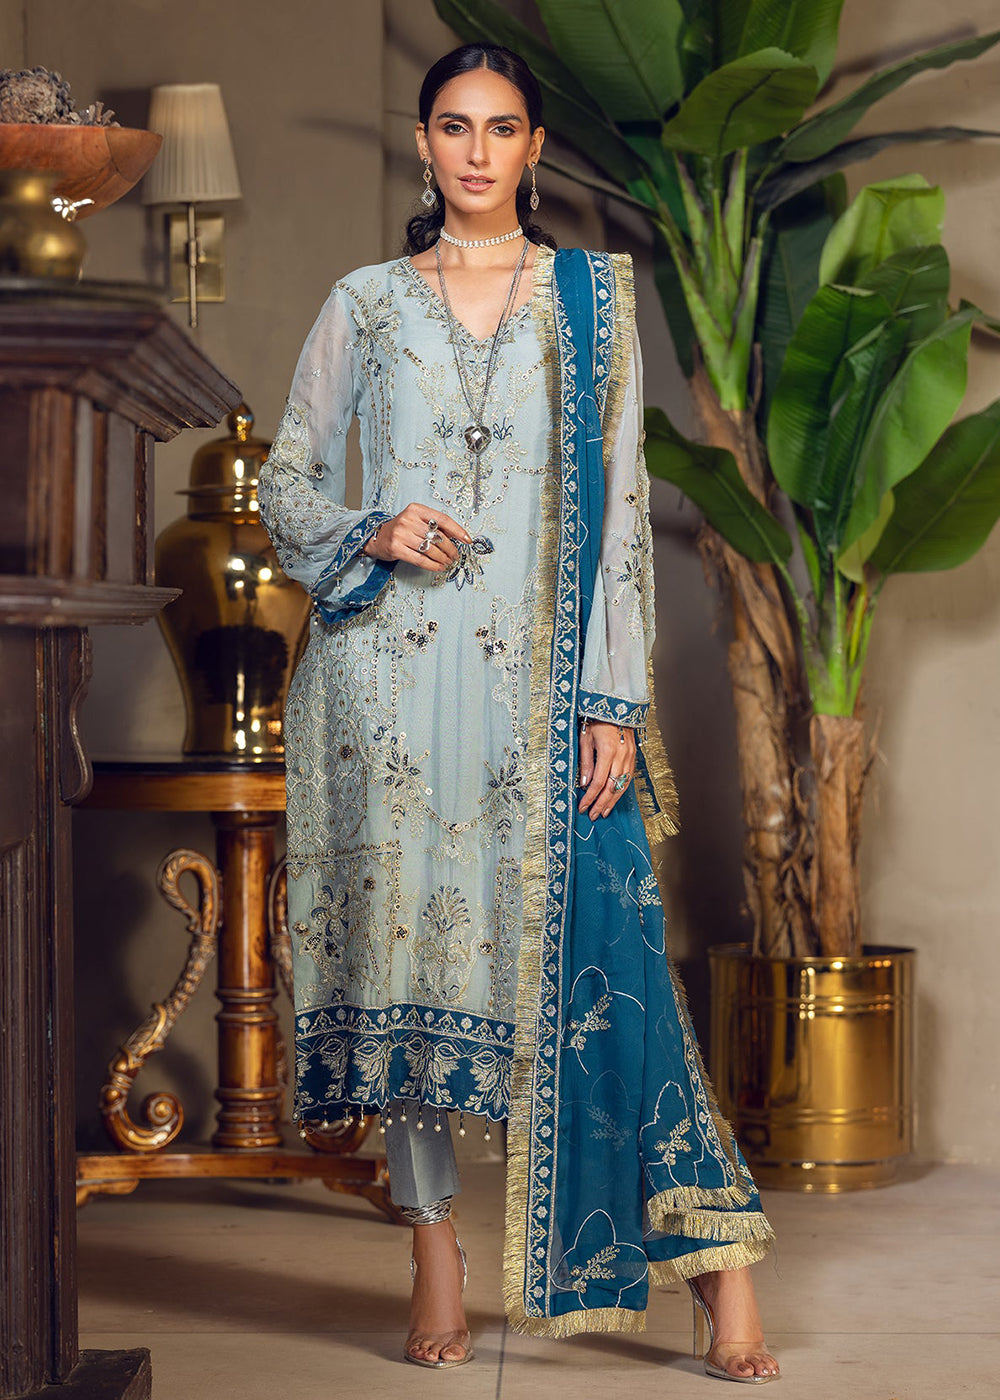 Buy Now Grayish Blue Pakistani Suit | Emaan Adeel | Le Festa Formal Edit 7 | LF-709 Online in USA, UK, Canada & Worldwide at Empress Clothing.